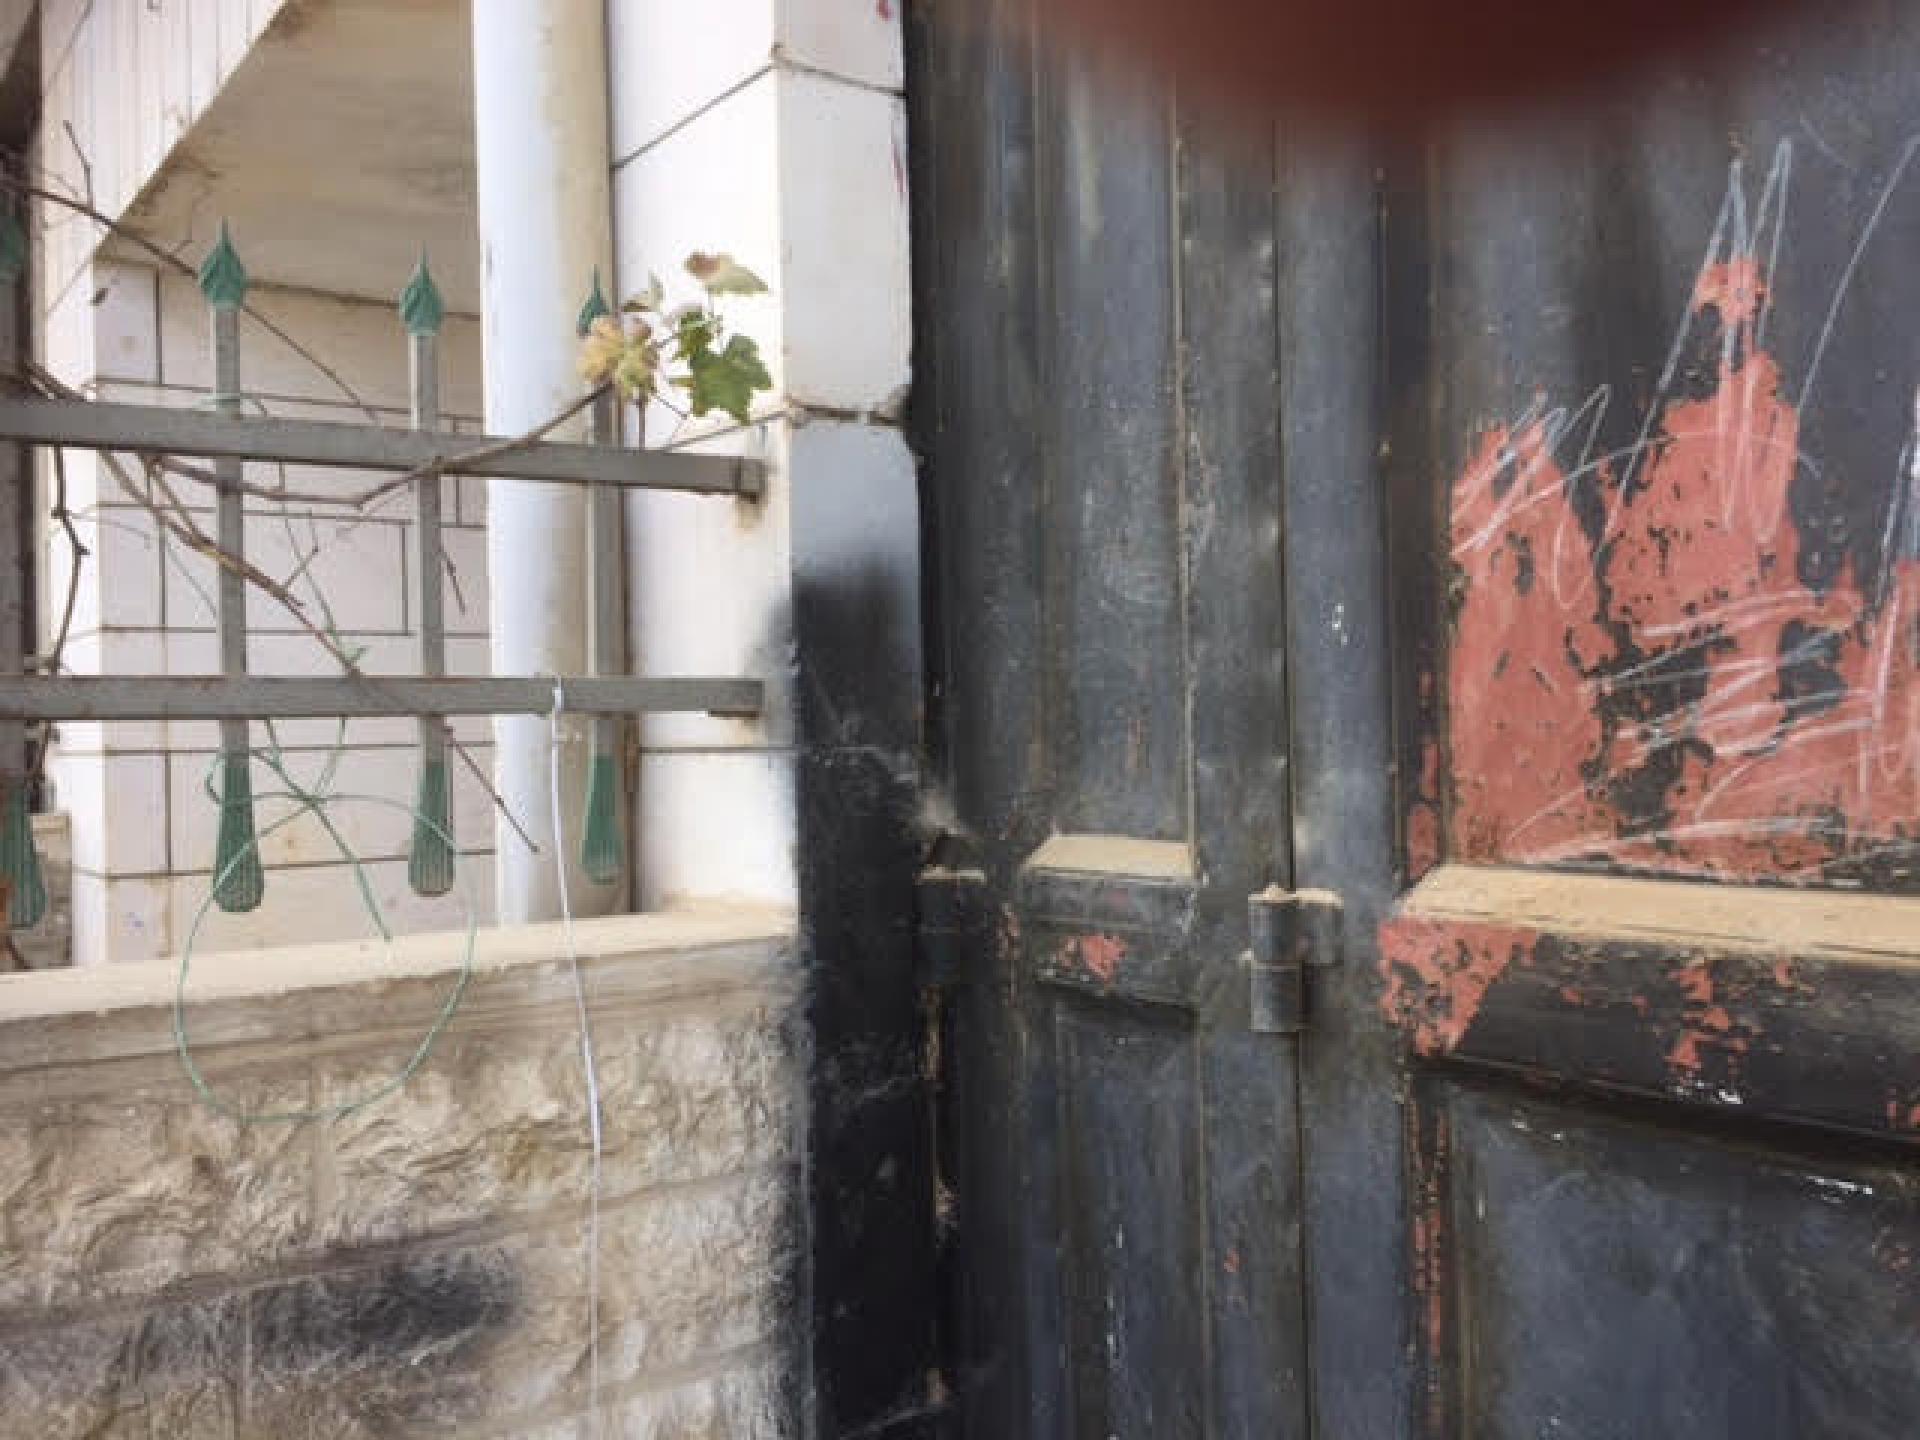 The burnt door of the carpentry